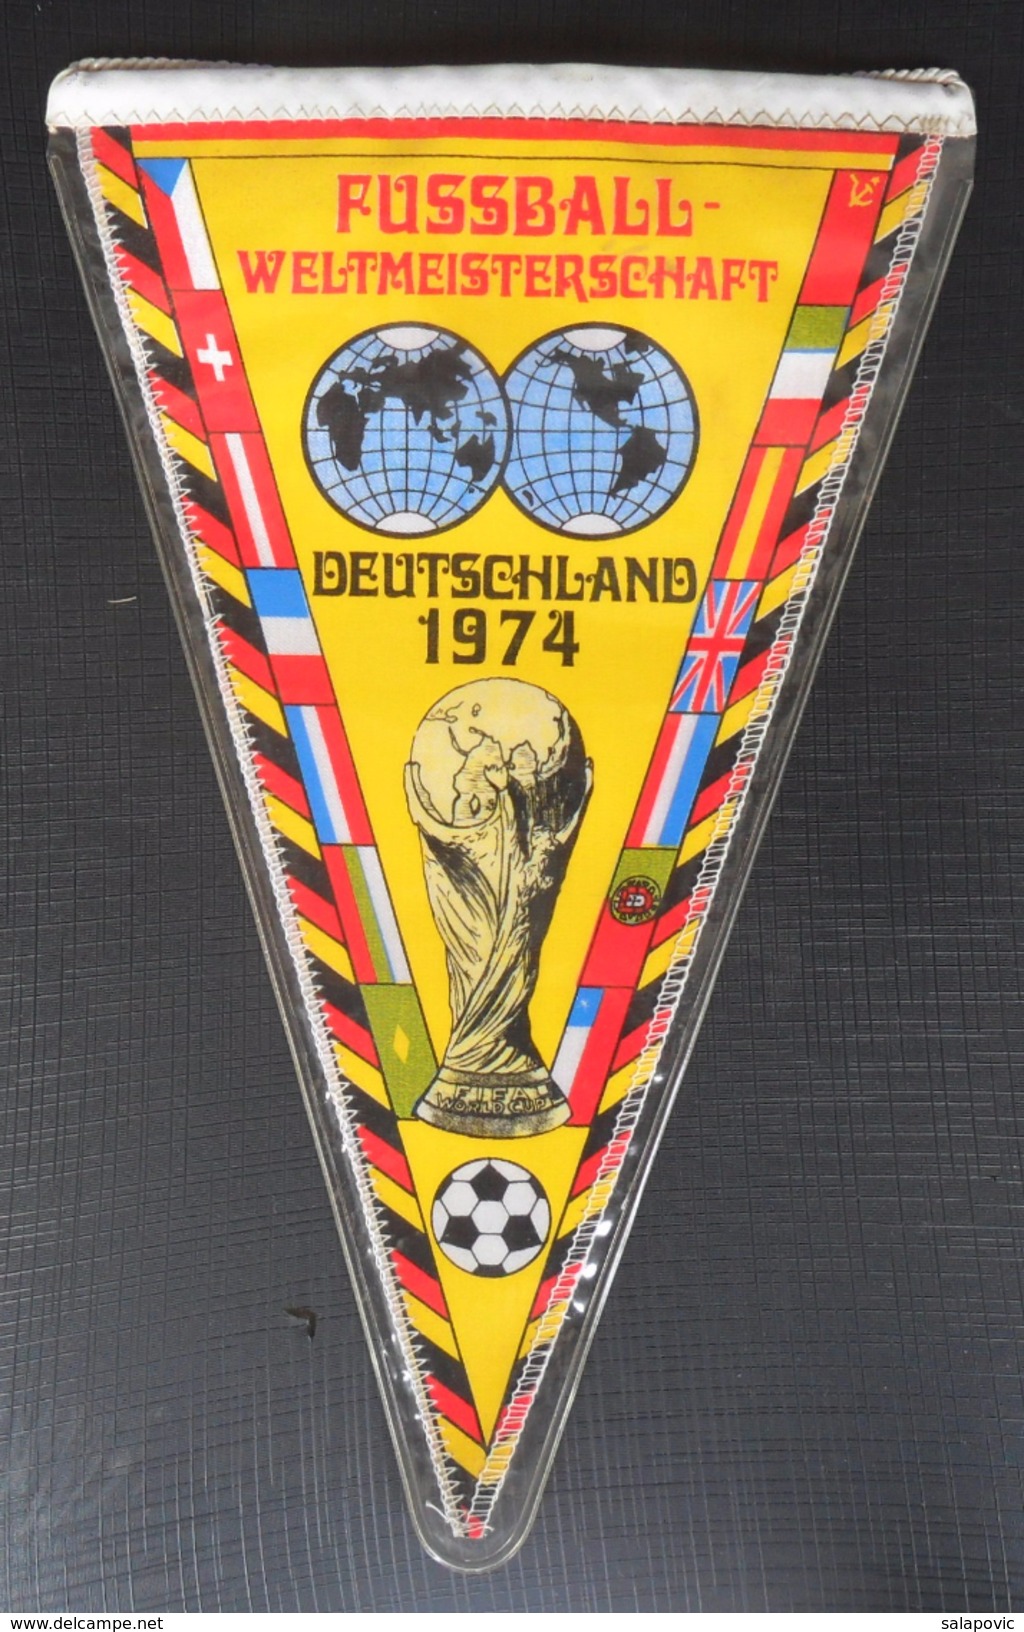 FIFA World Cup 1974 DEUTSCHLAND, GERMANY FOOTBALL CLUB CALCIO OLD PENNANT - Bekleidung, Souvenirs Und Sonstige